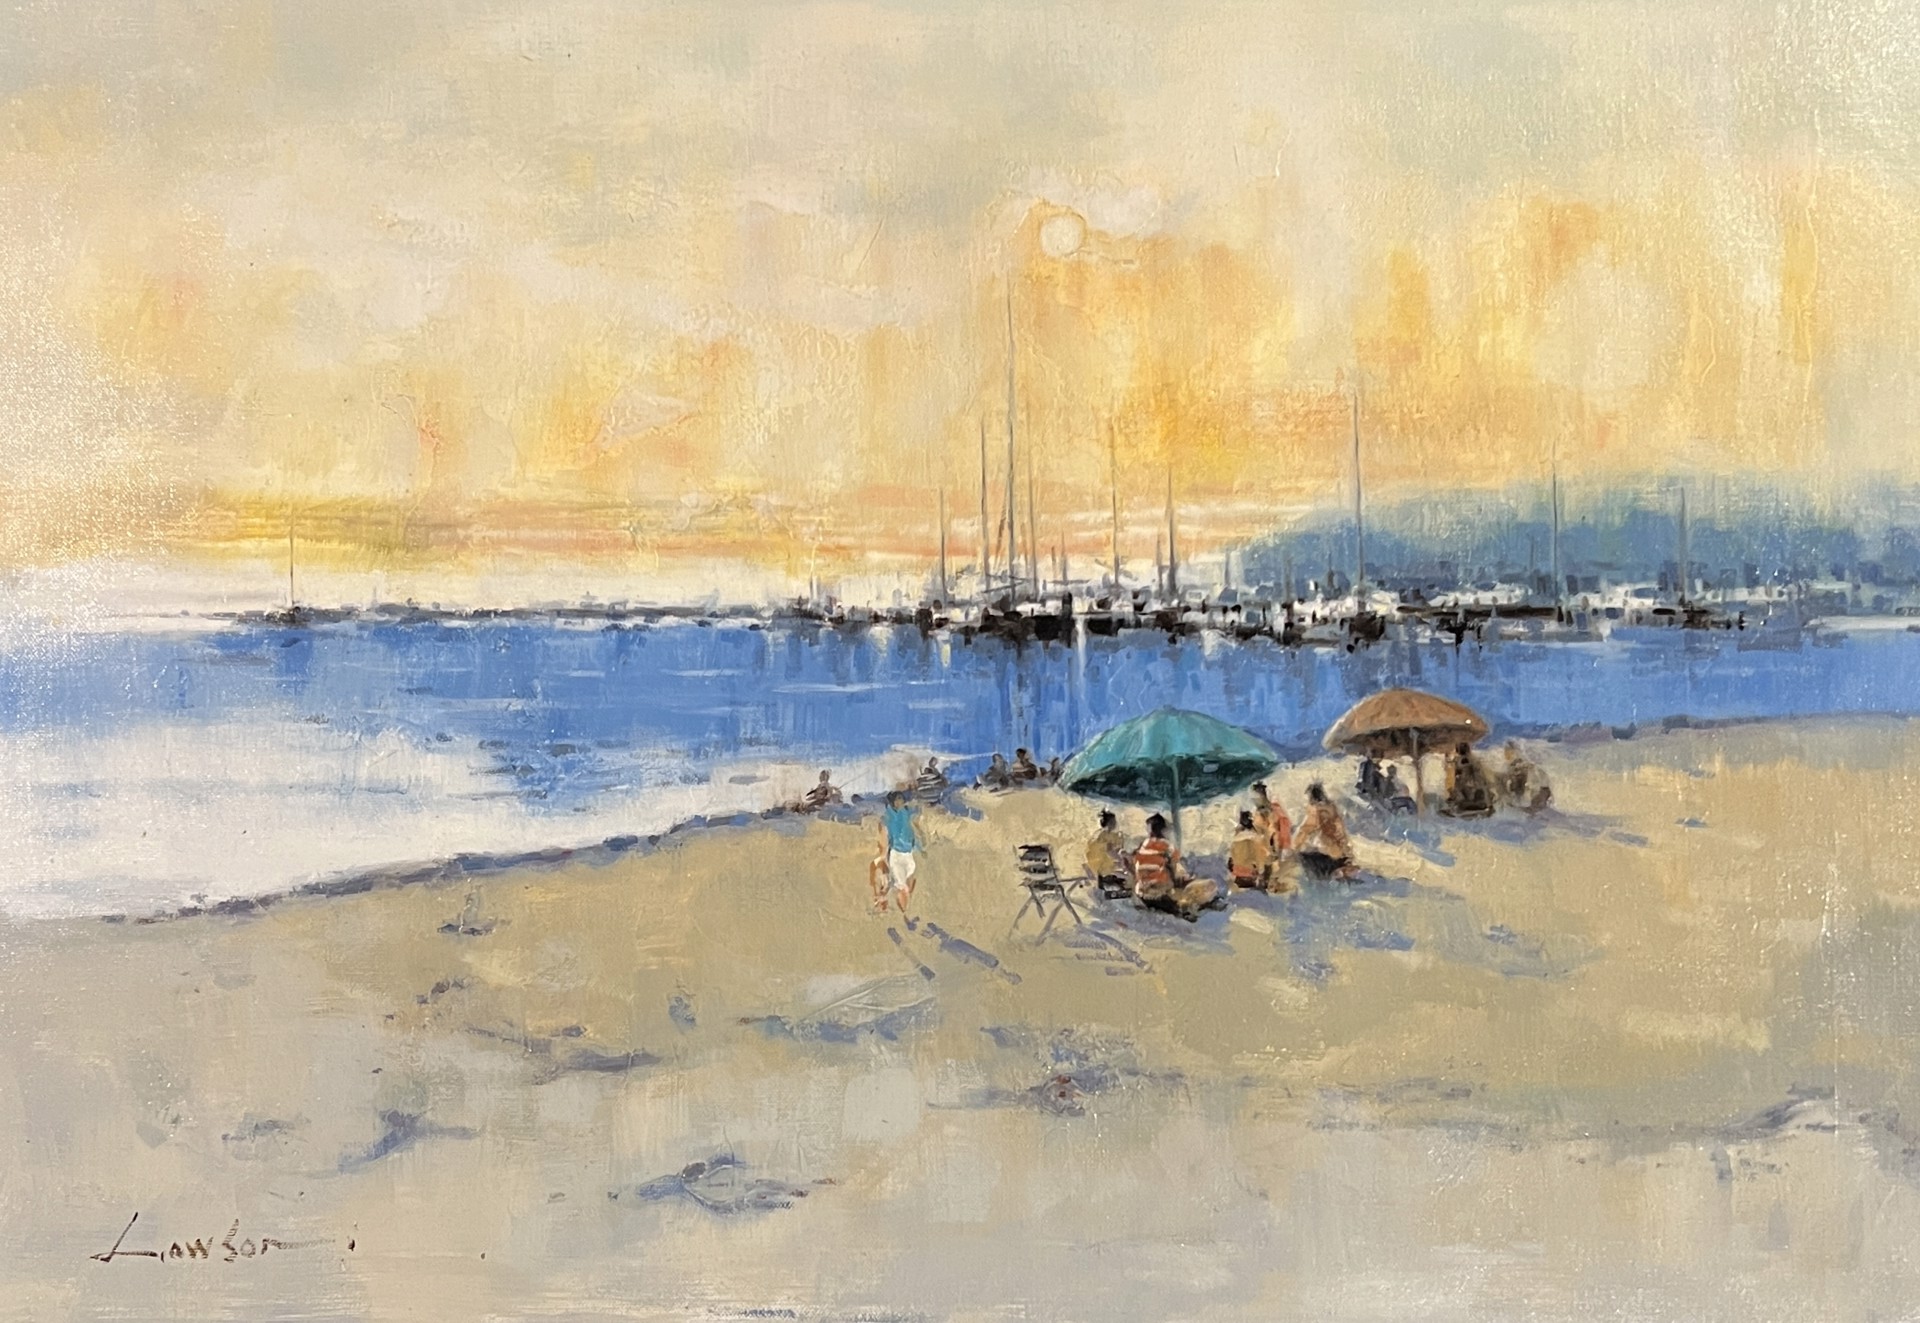 HARBOR BEACH DAY by LAWSON